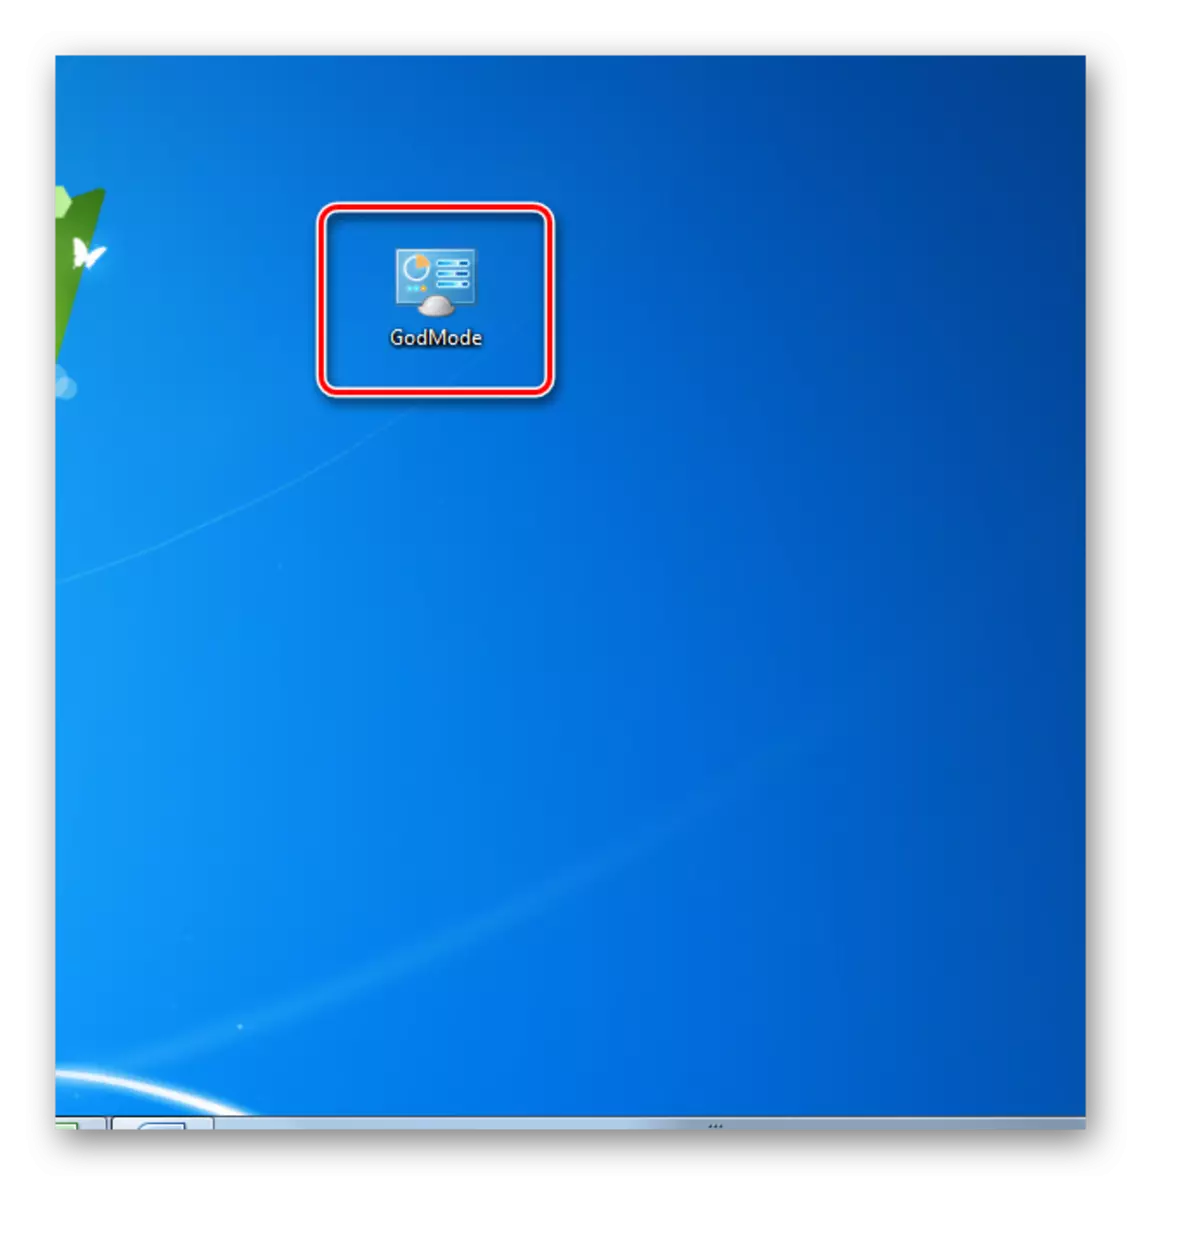 Windows 7 இல் டெஸ்க்டாப்பில் உள்ள Godmode லேபிளில் கிளிக் செய்வதன் மூலம் கடவுளுடைய பயன்முறையில் செல்லுங்கள்